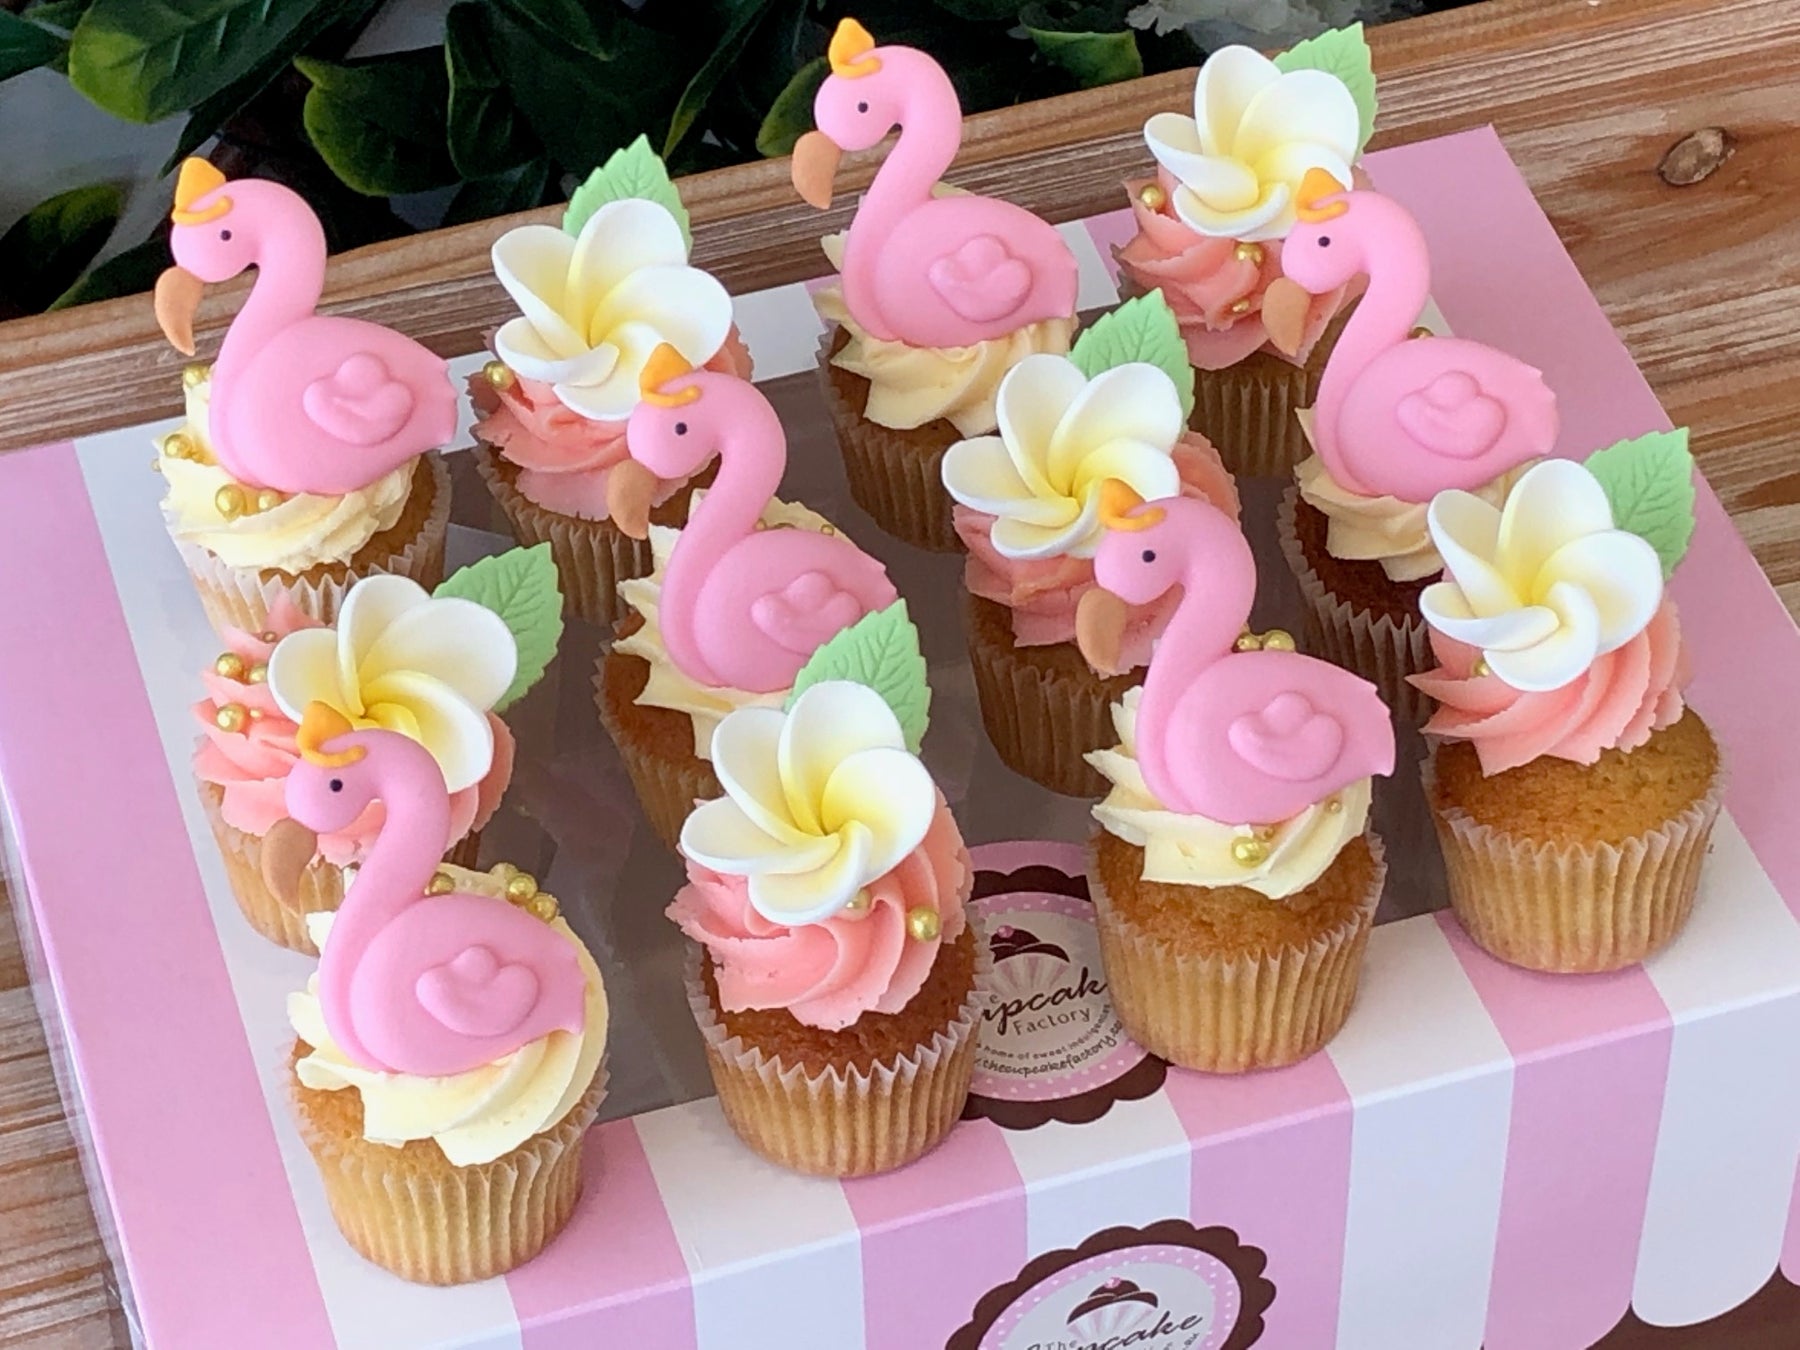 Flamingo Theme Cupcakes 12 Pack The Cupcake Factory 4303